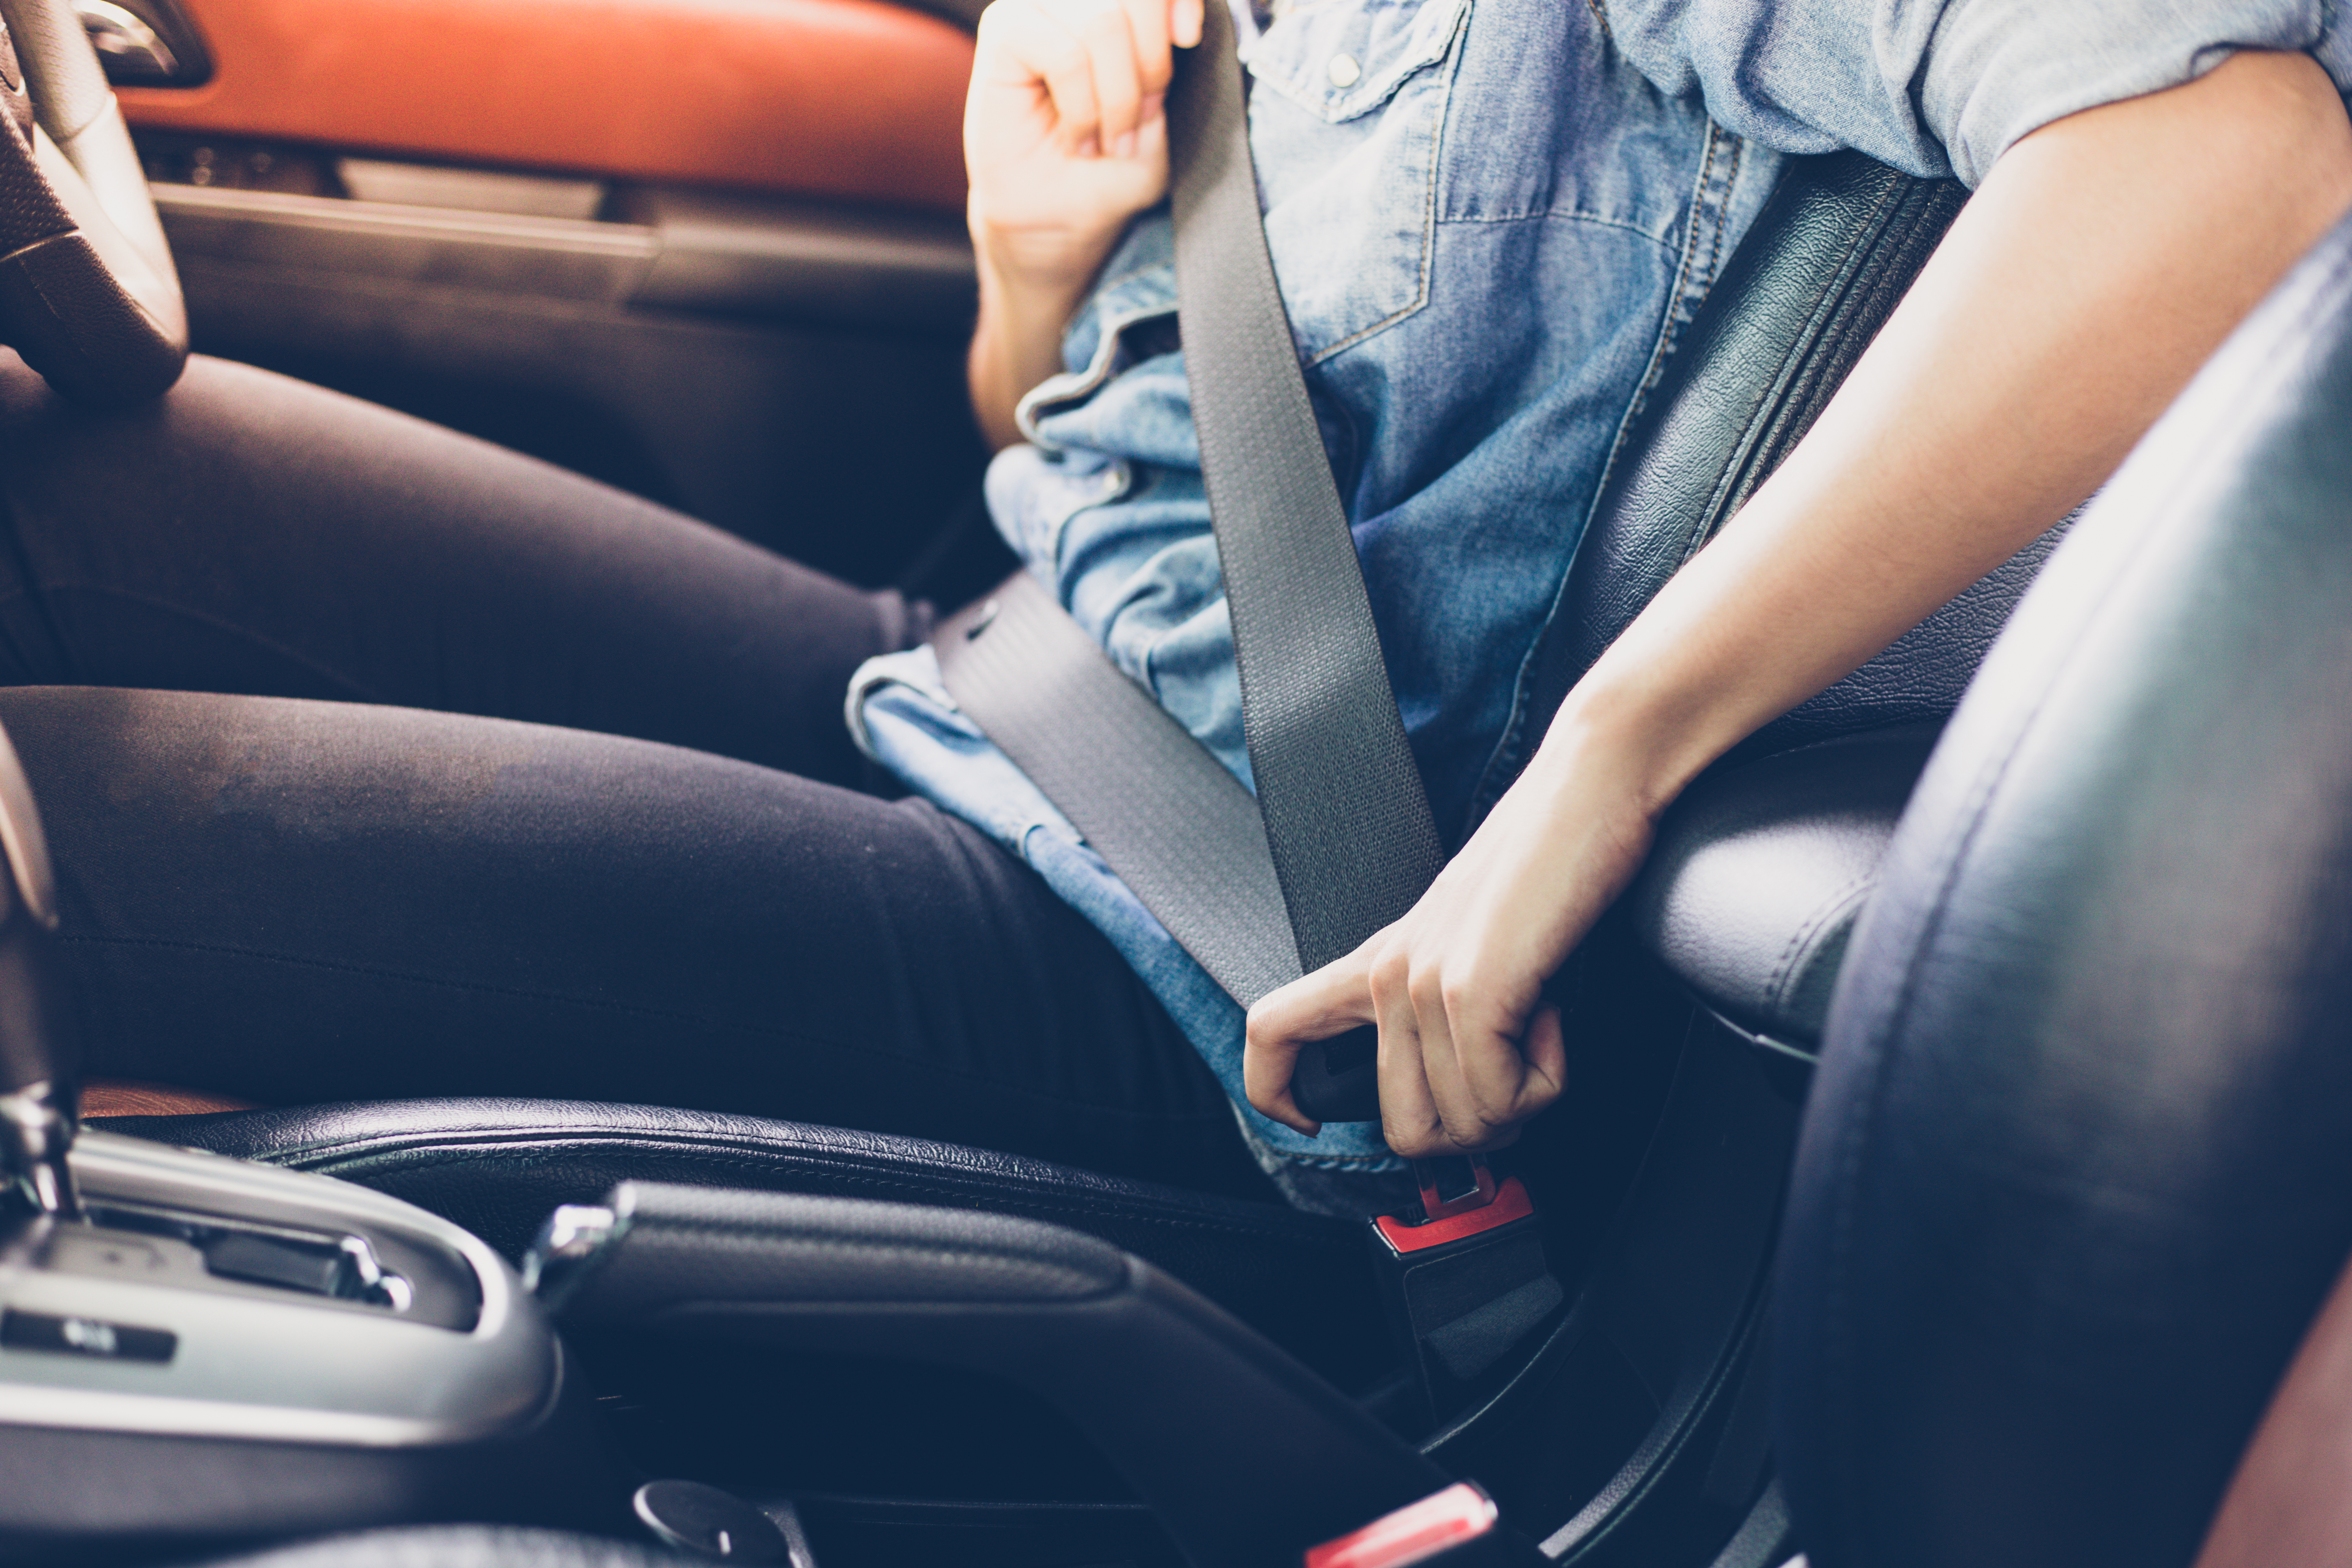 Woman unfastening seat belt in the car. | Source: Shutterstock